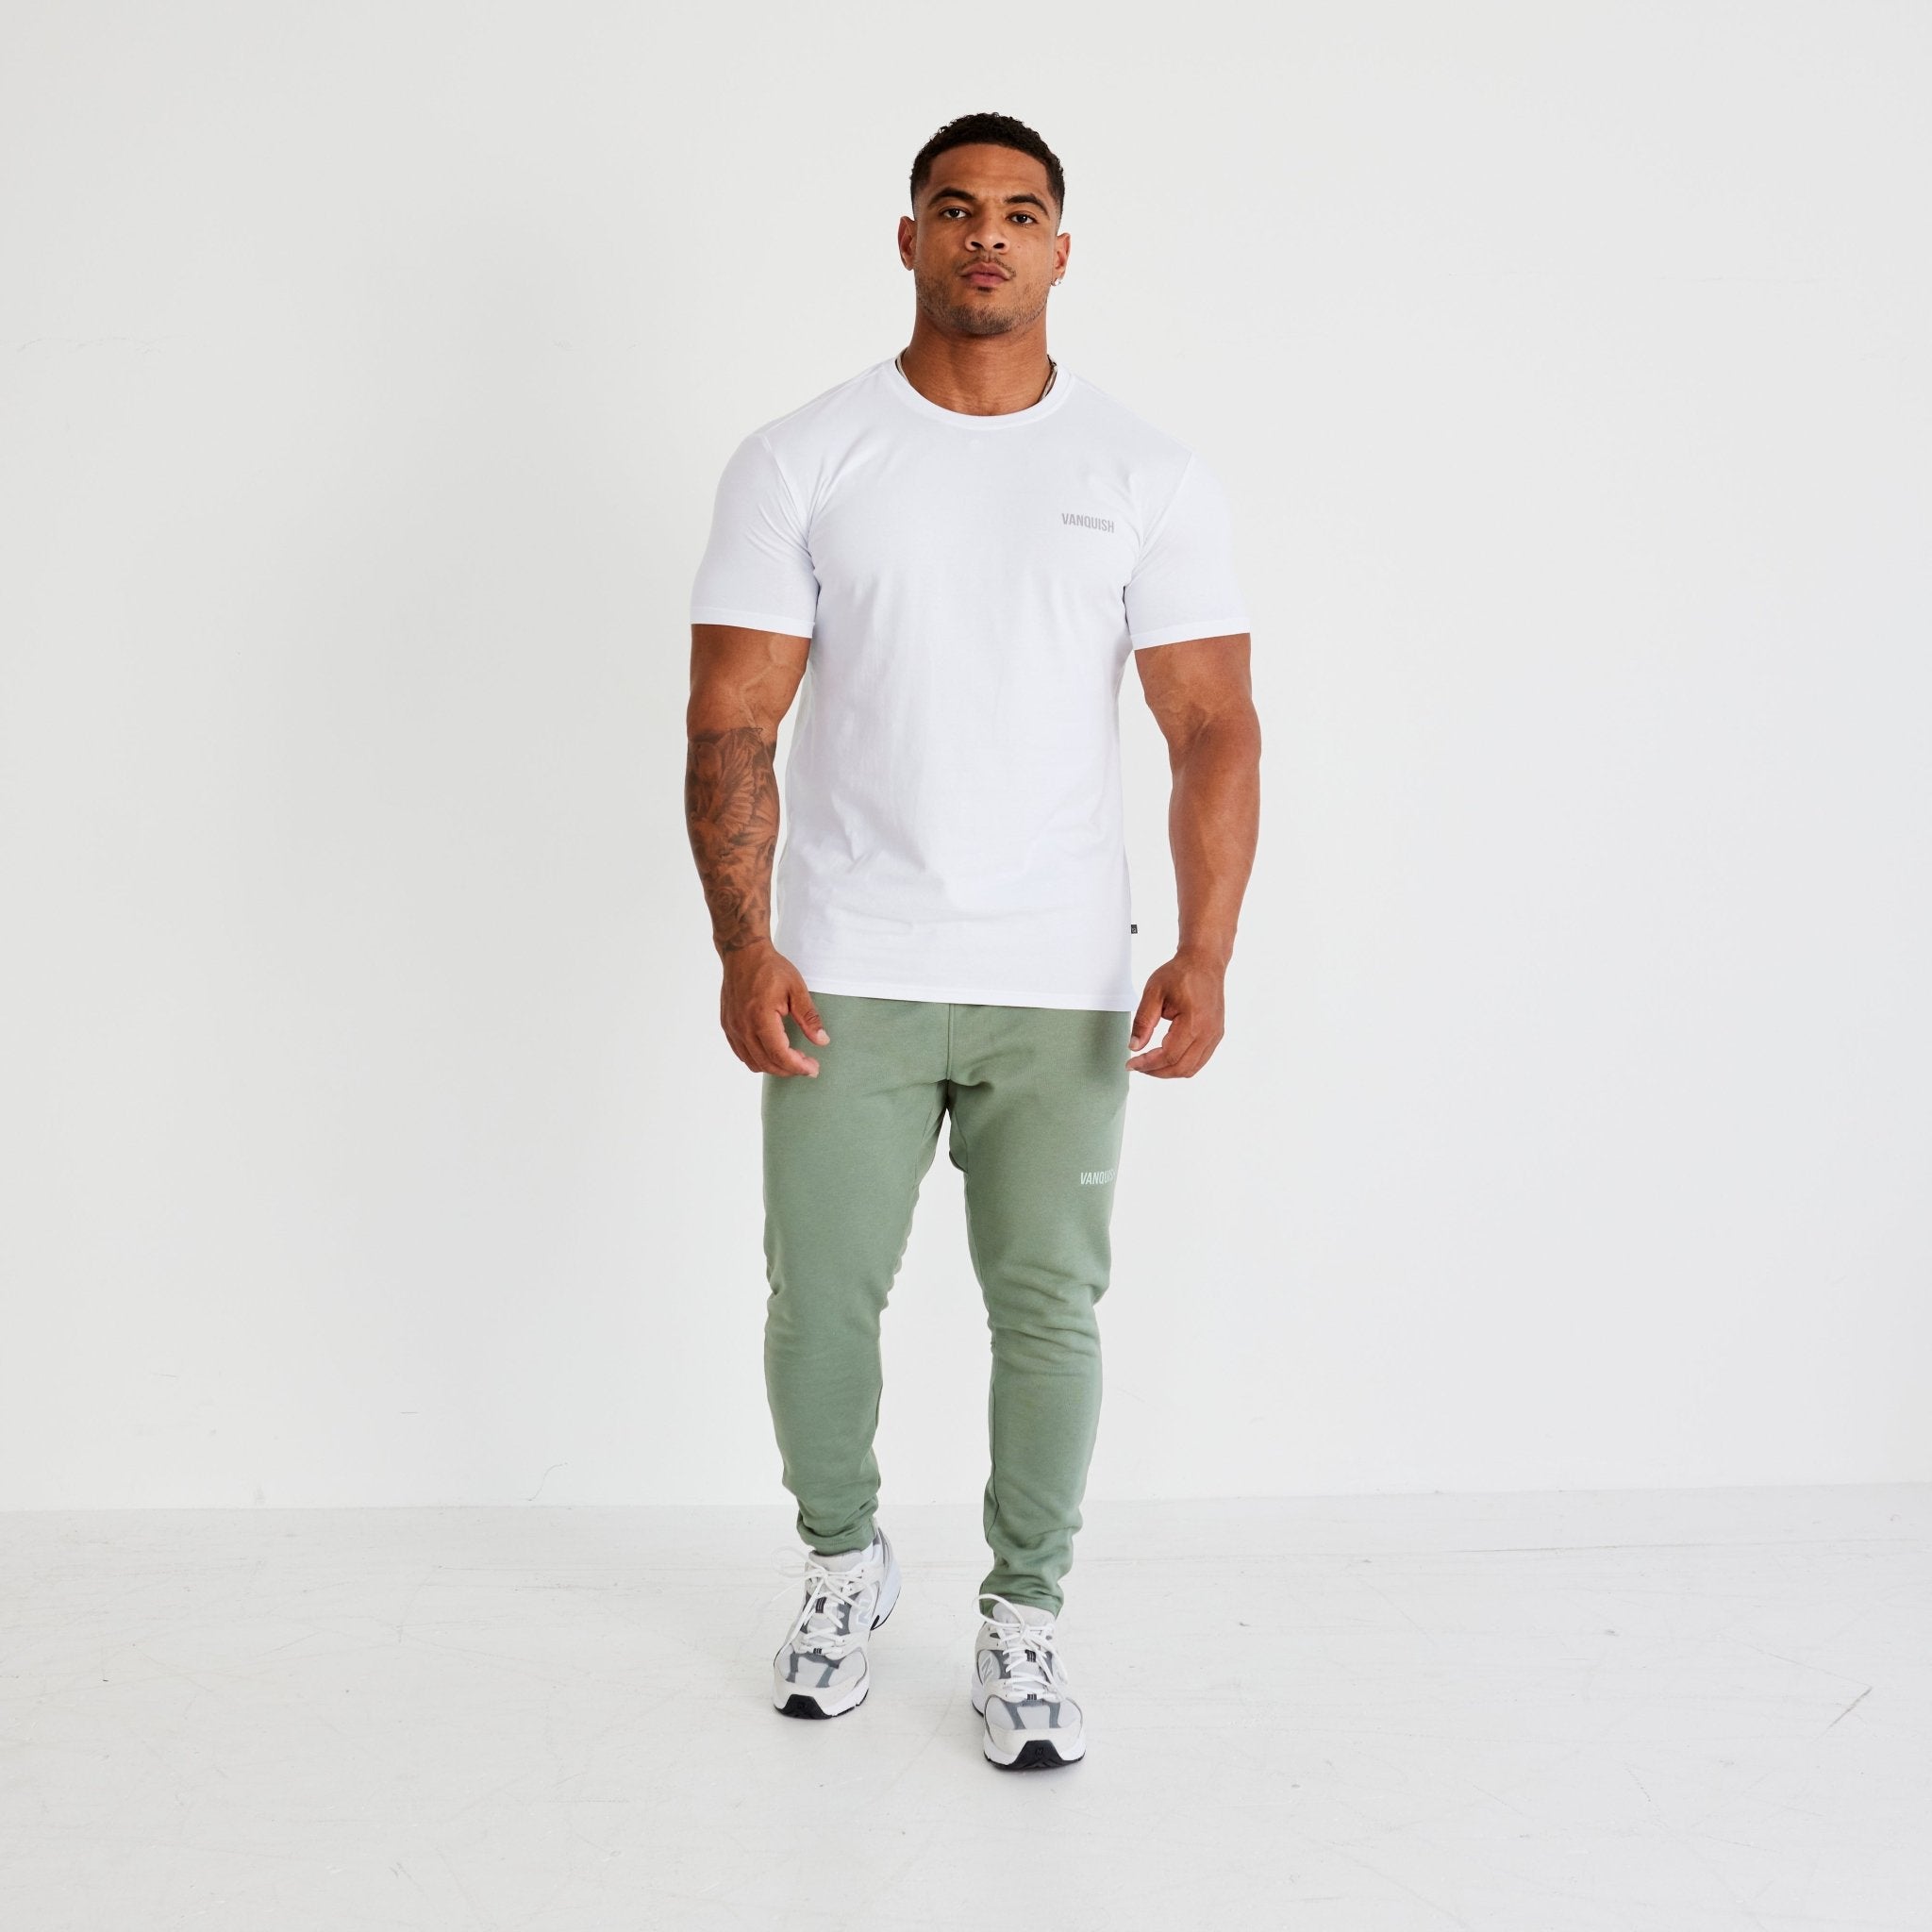 Vanquish Essential White Slim Fit Short Sleeve T Shirt - Vanquish Fitness